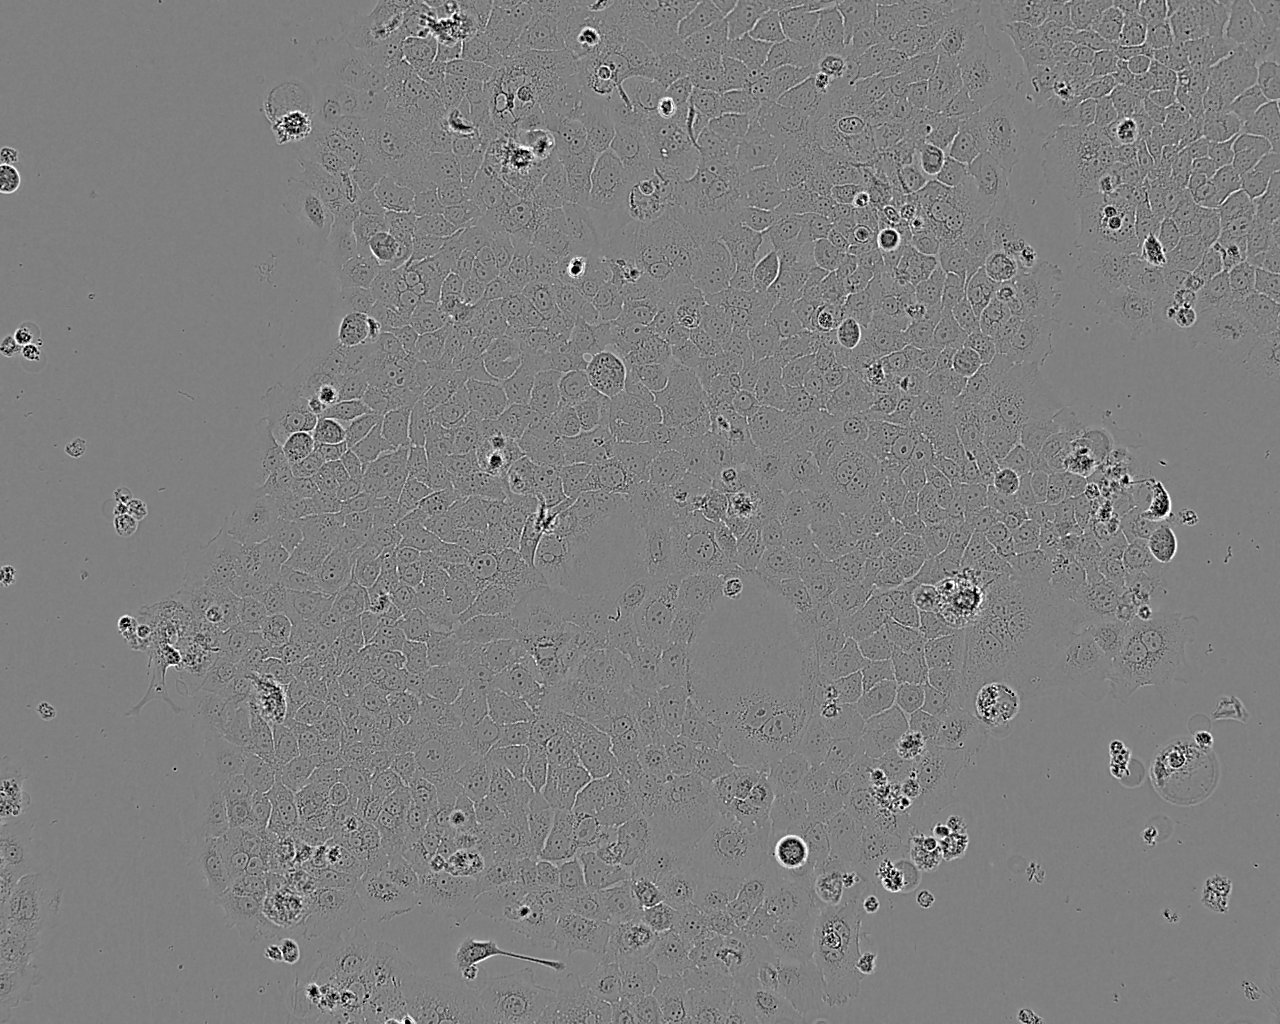 MDA-PCa-2b epithelioid cells人前列腺癌细胞系,MDA-PCa-2b epithelioid cells